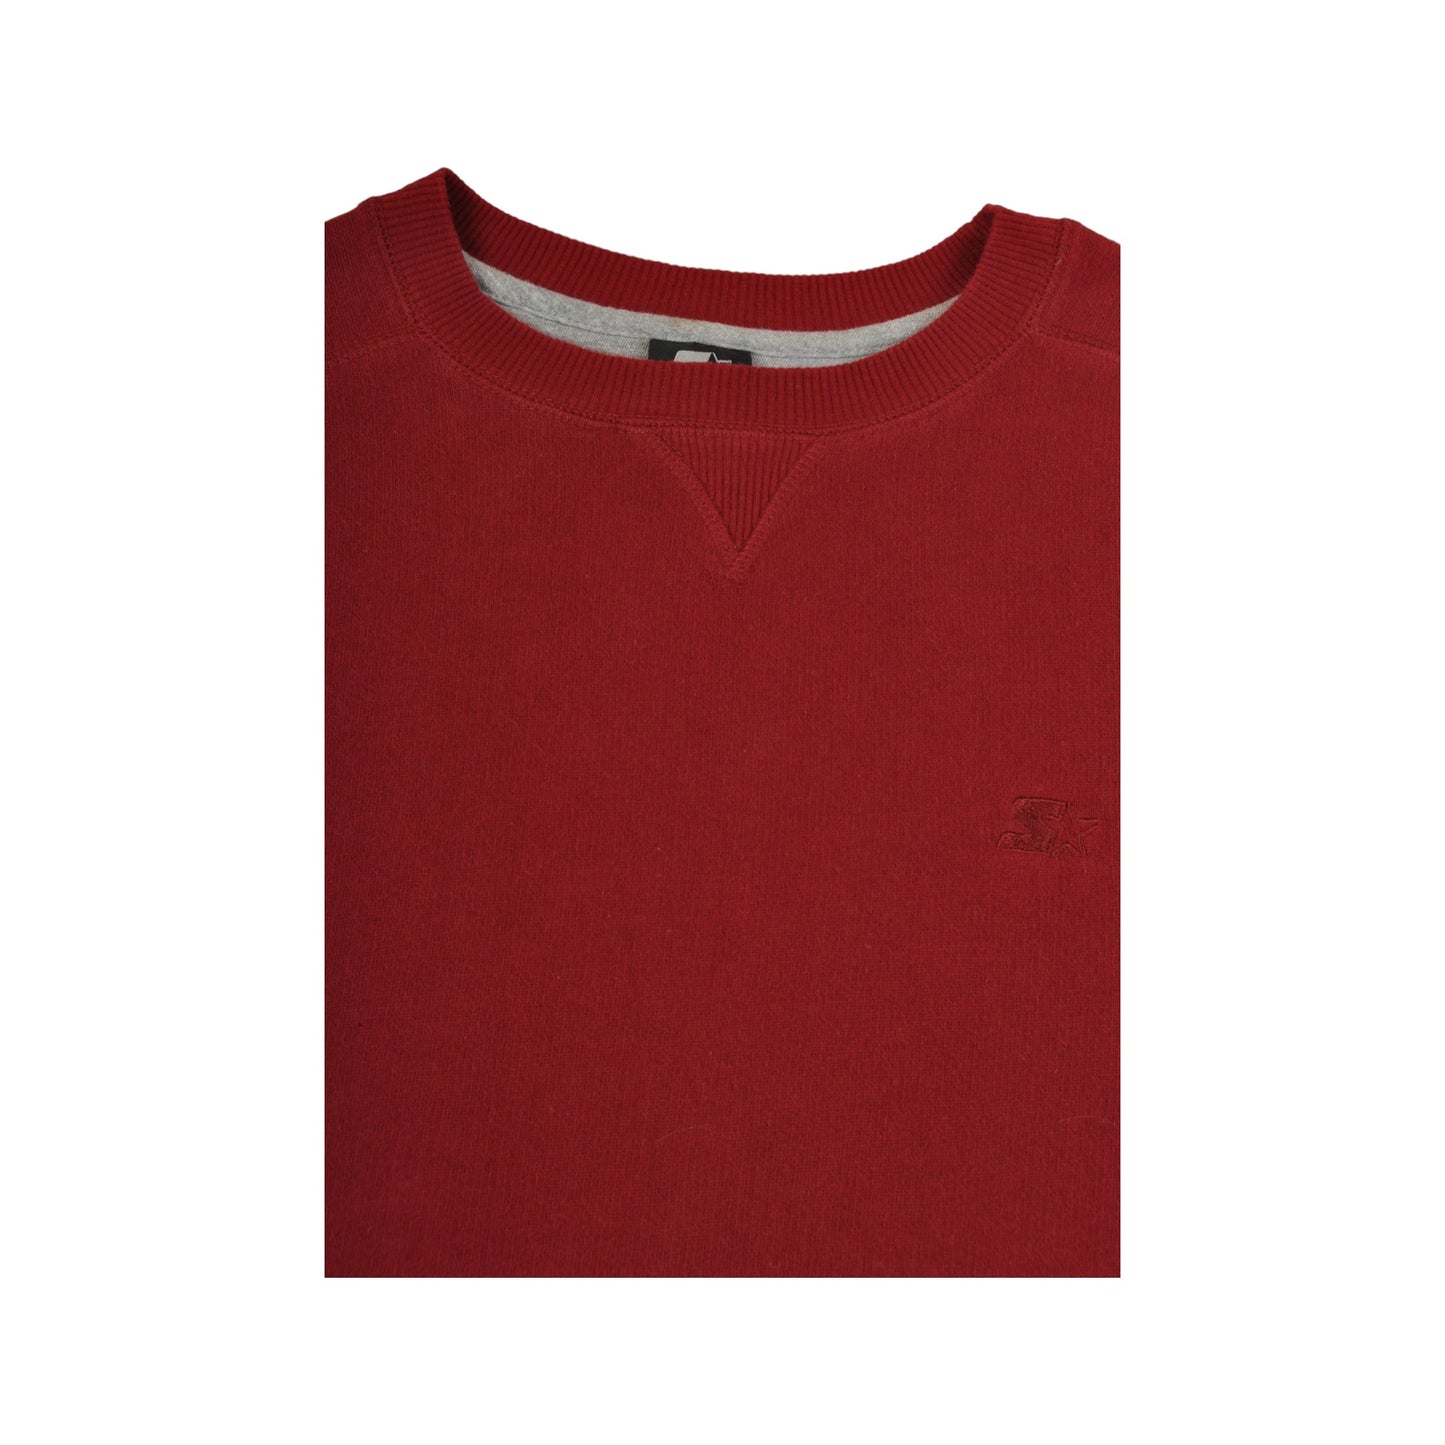 Vintage Starter Crewneck Sweatshirt Red Medium